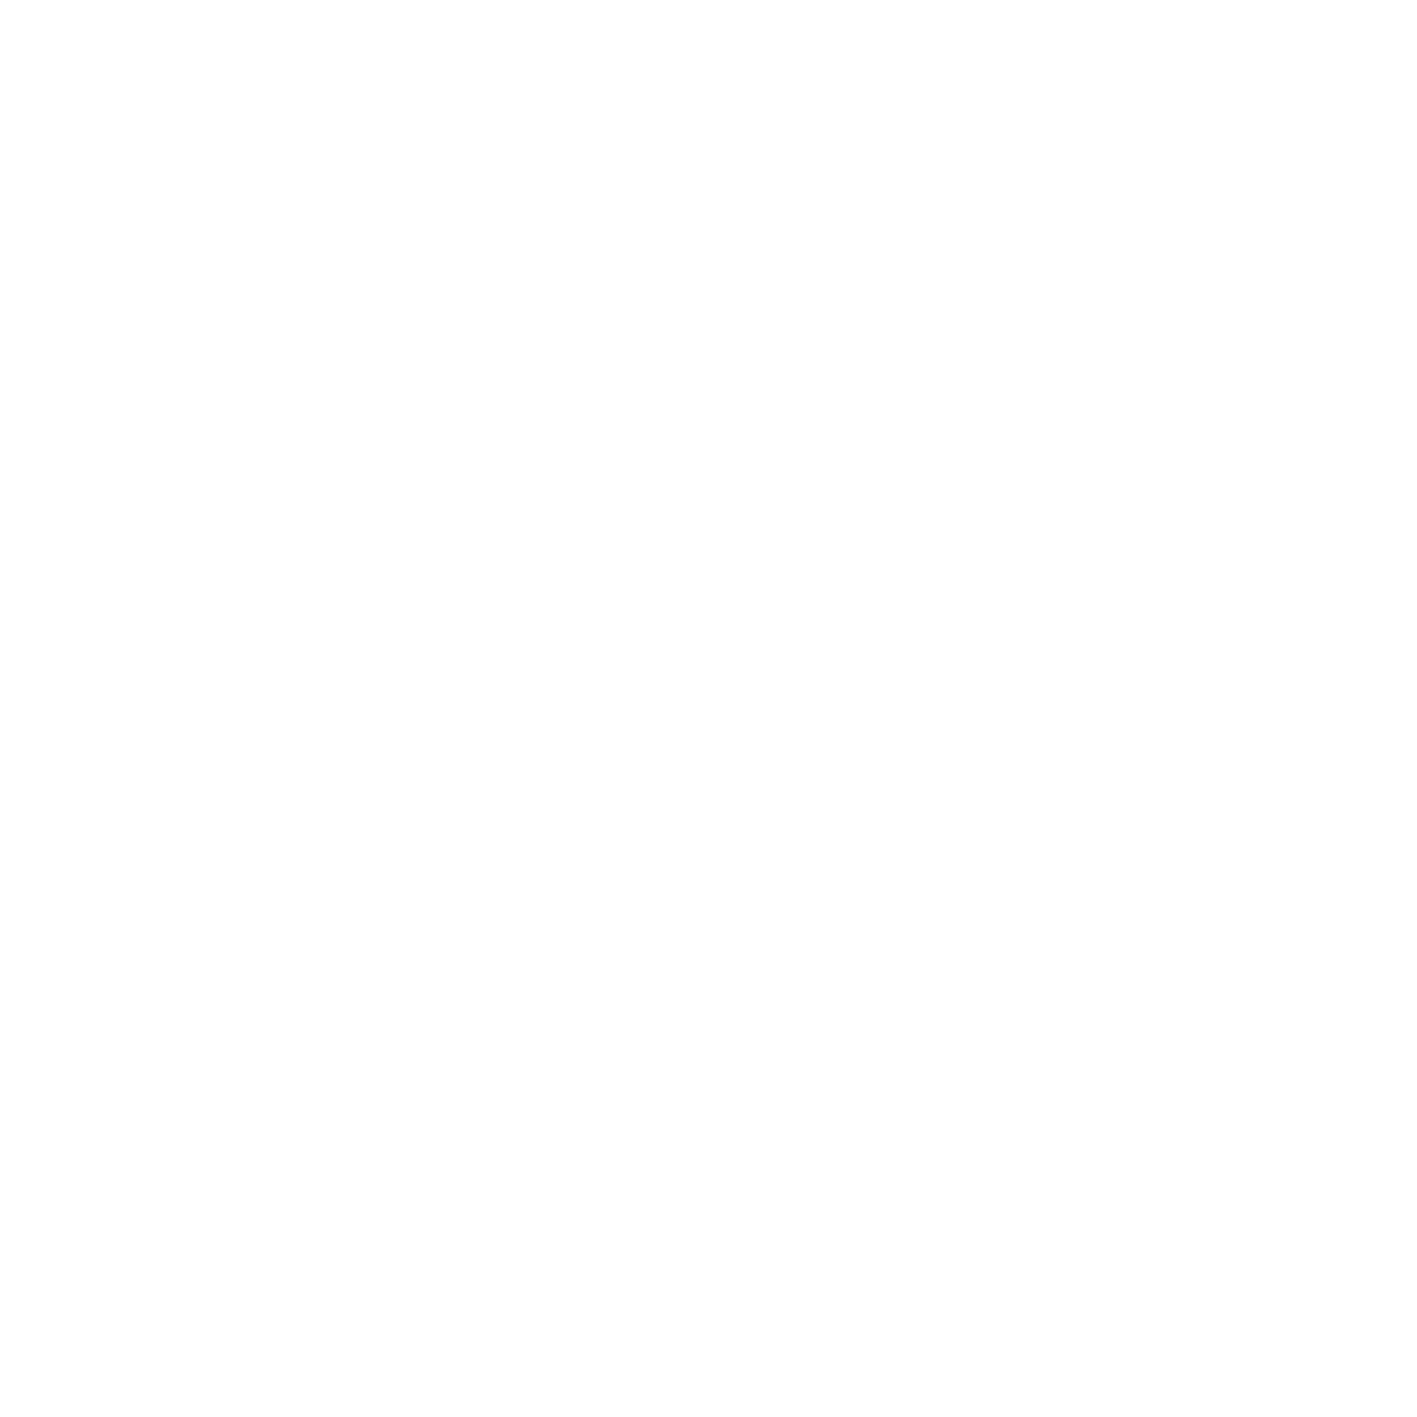 Matt Diosdado